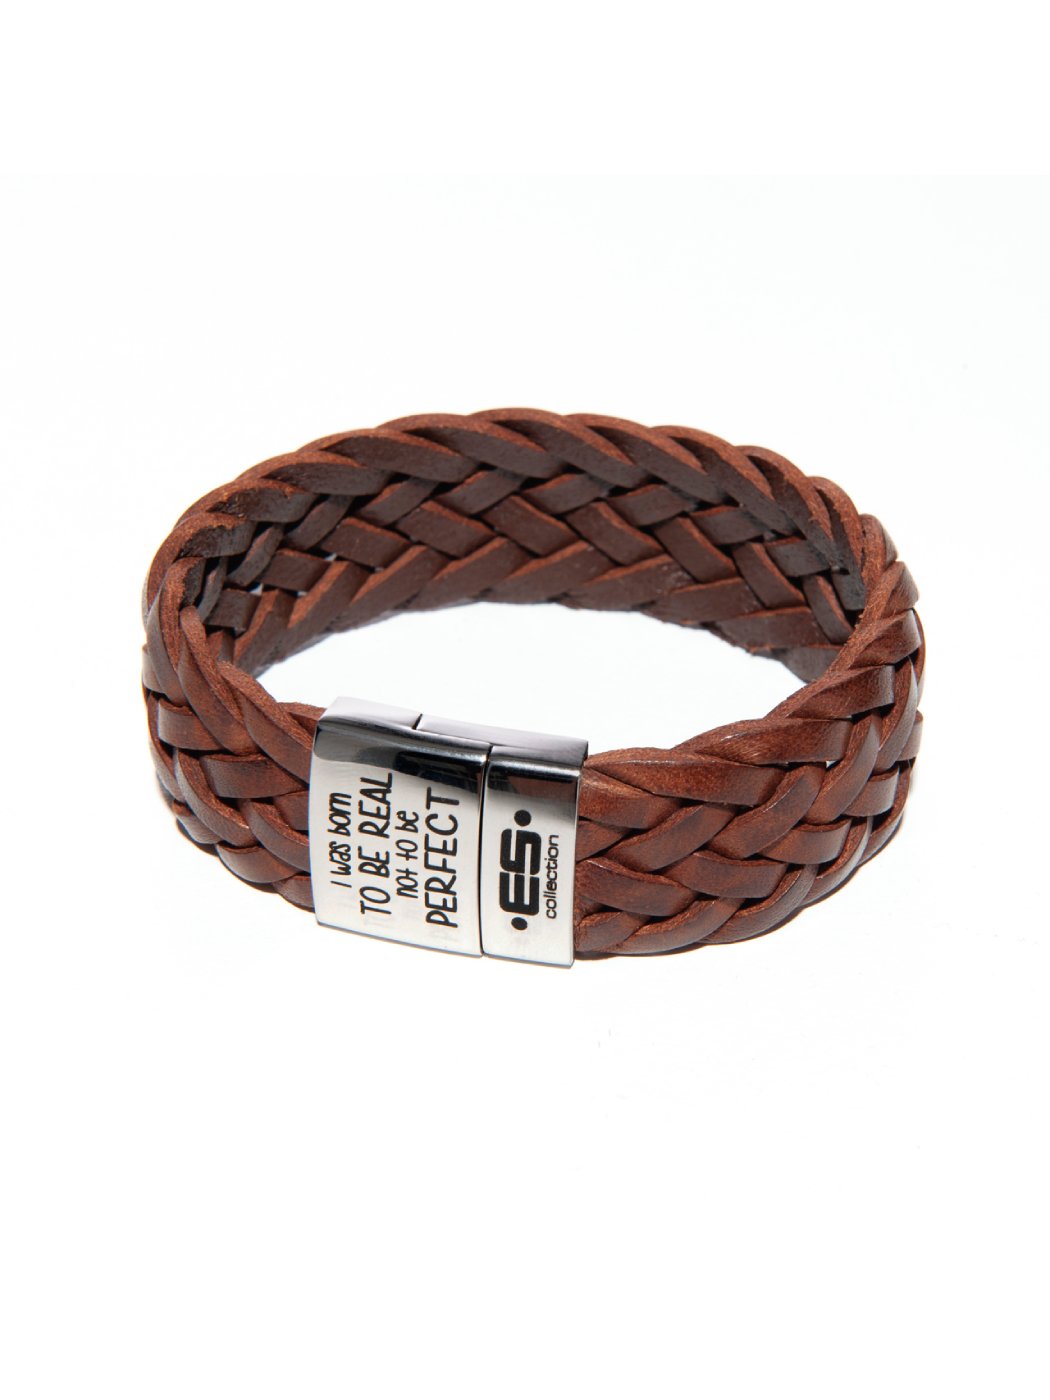 Born Leather Bracelet | Brown